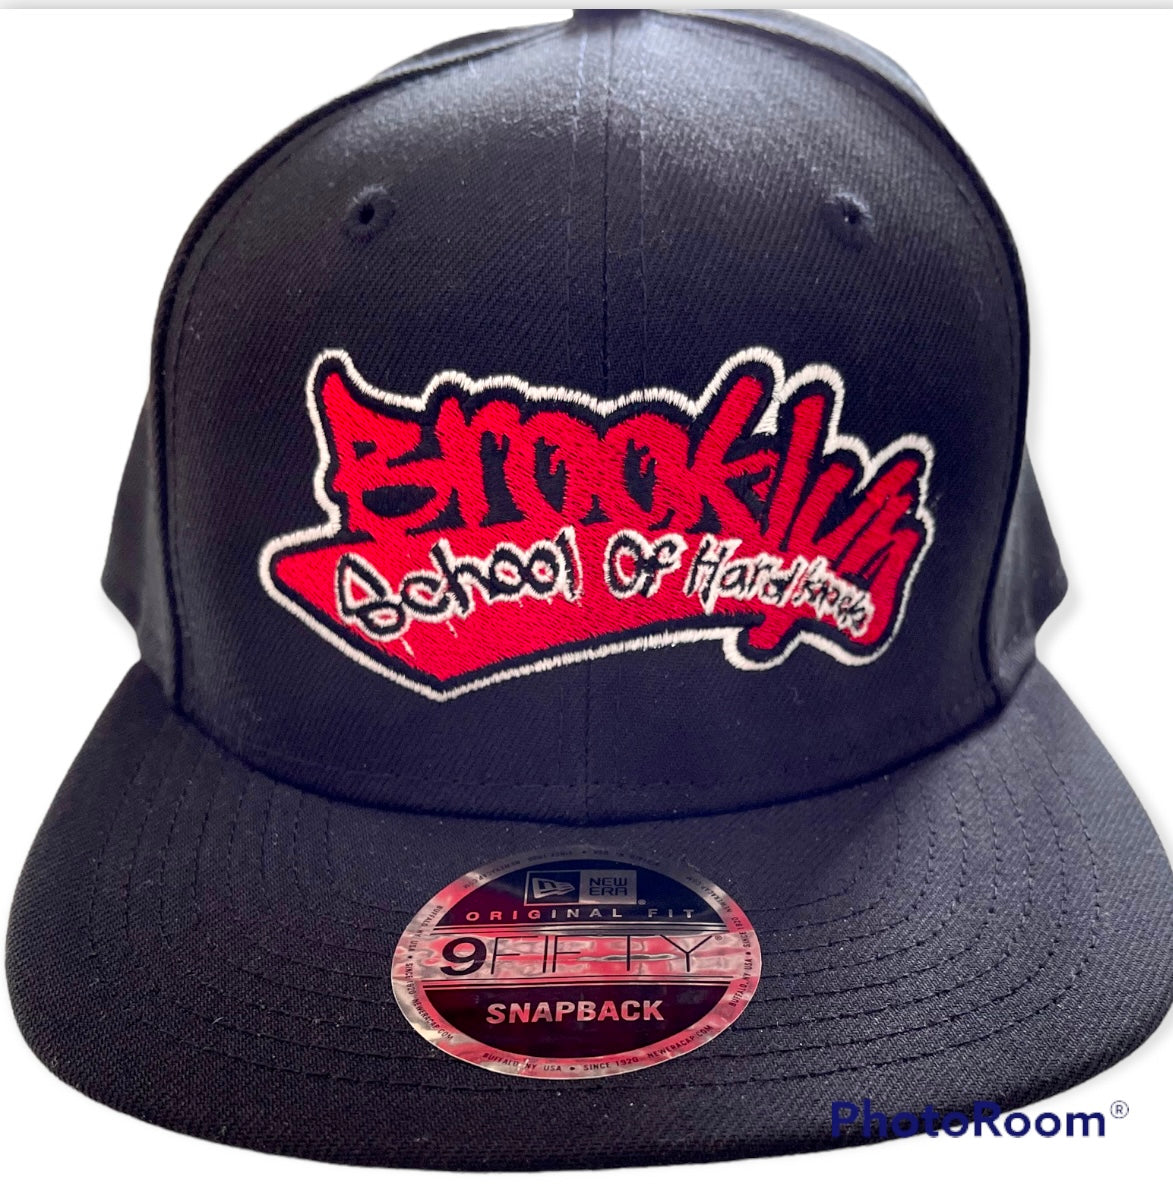 SnapBack – Brooklyn School Of Hard Knocks